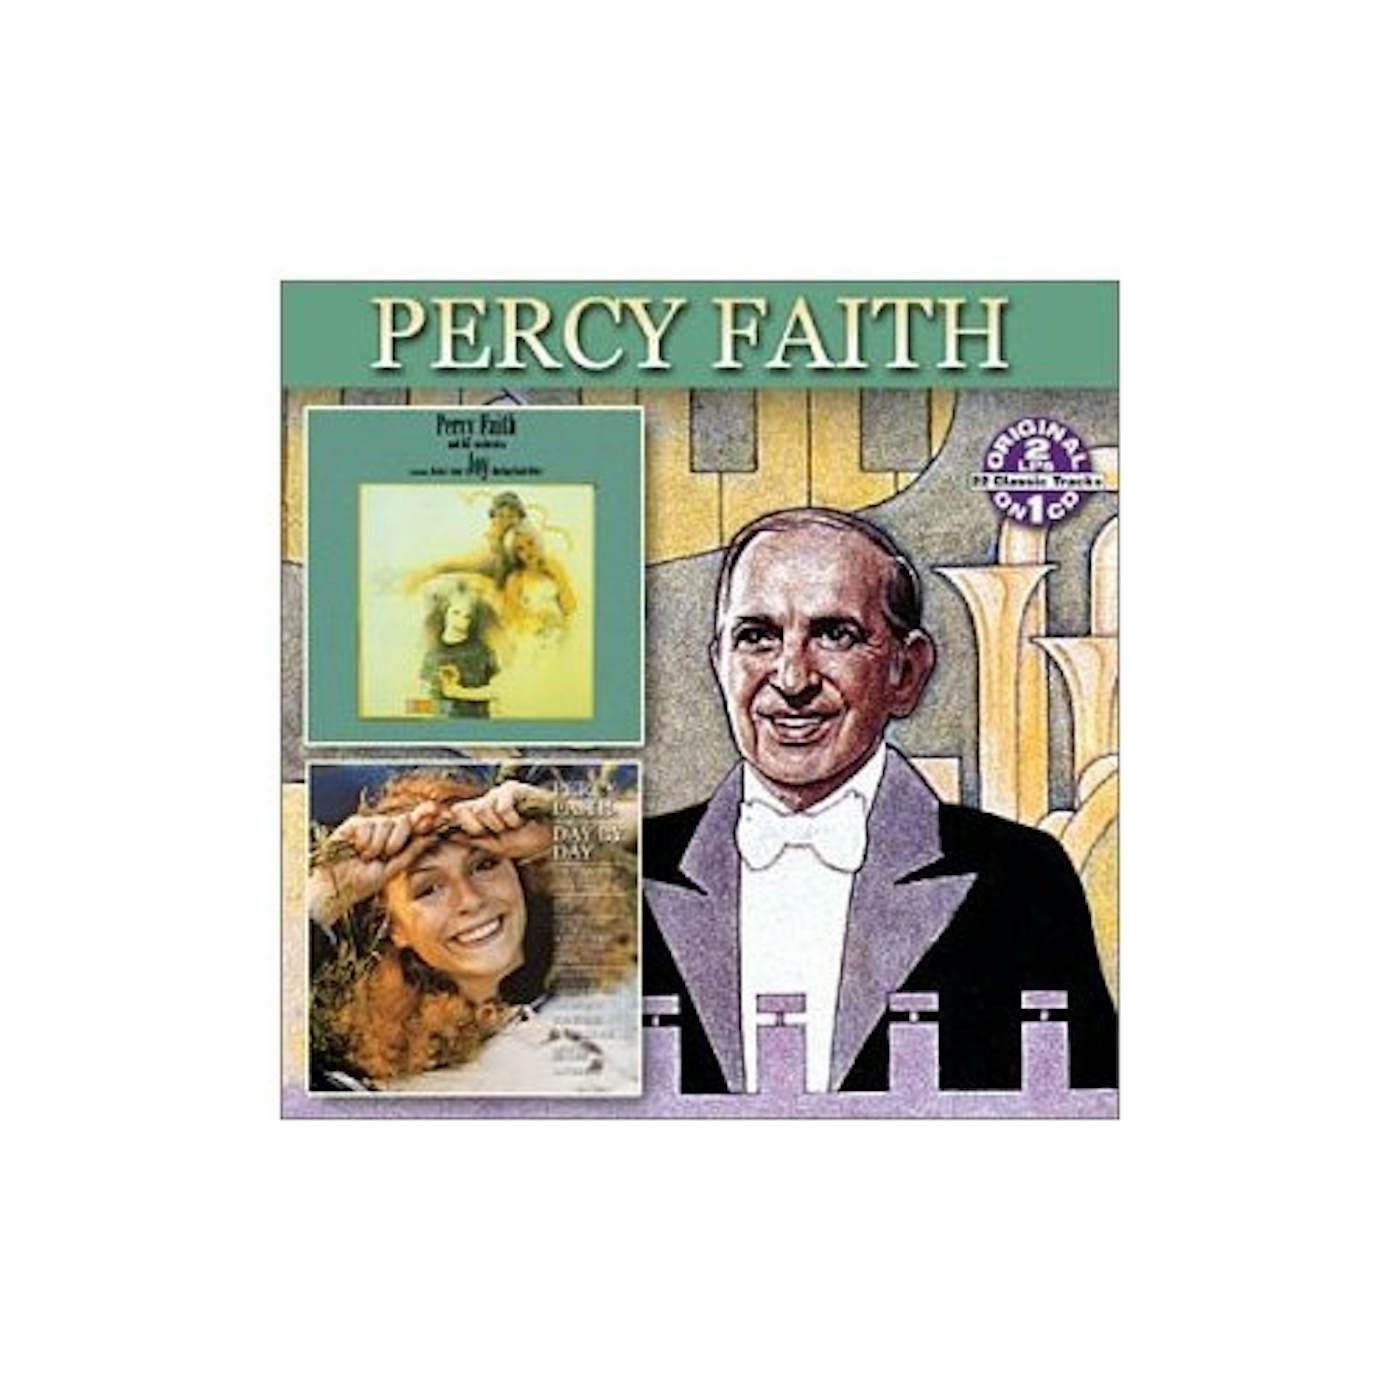 Percy Faith JOY: DAY BY DAY CD